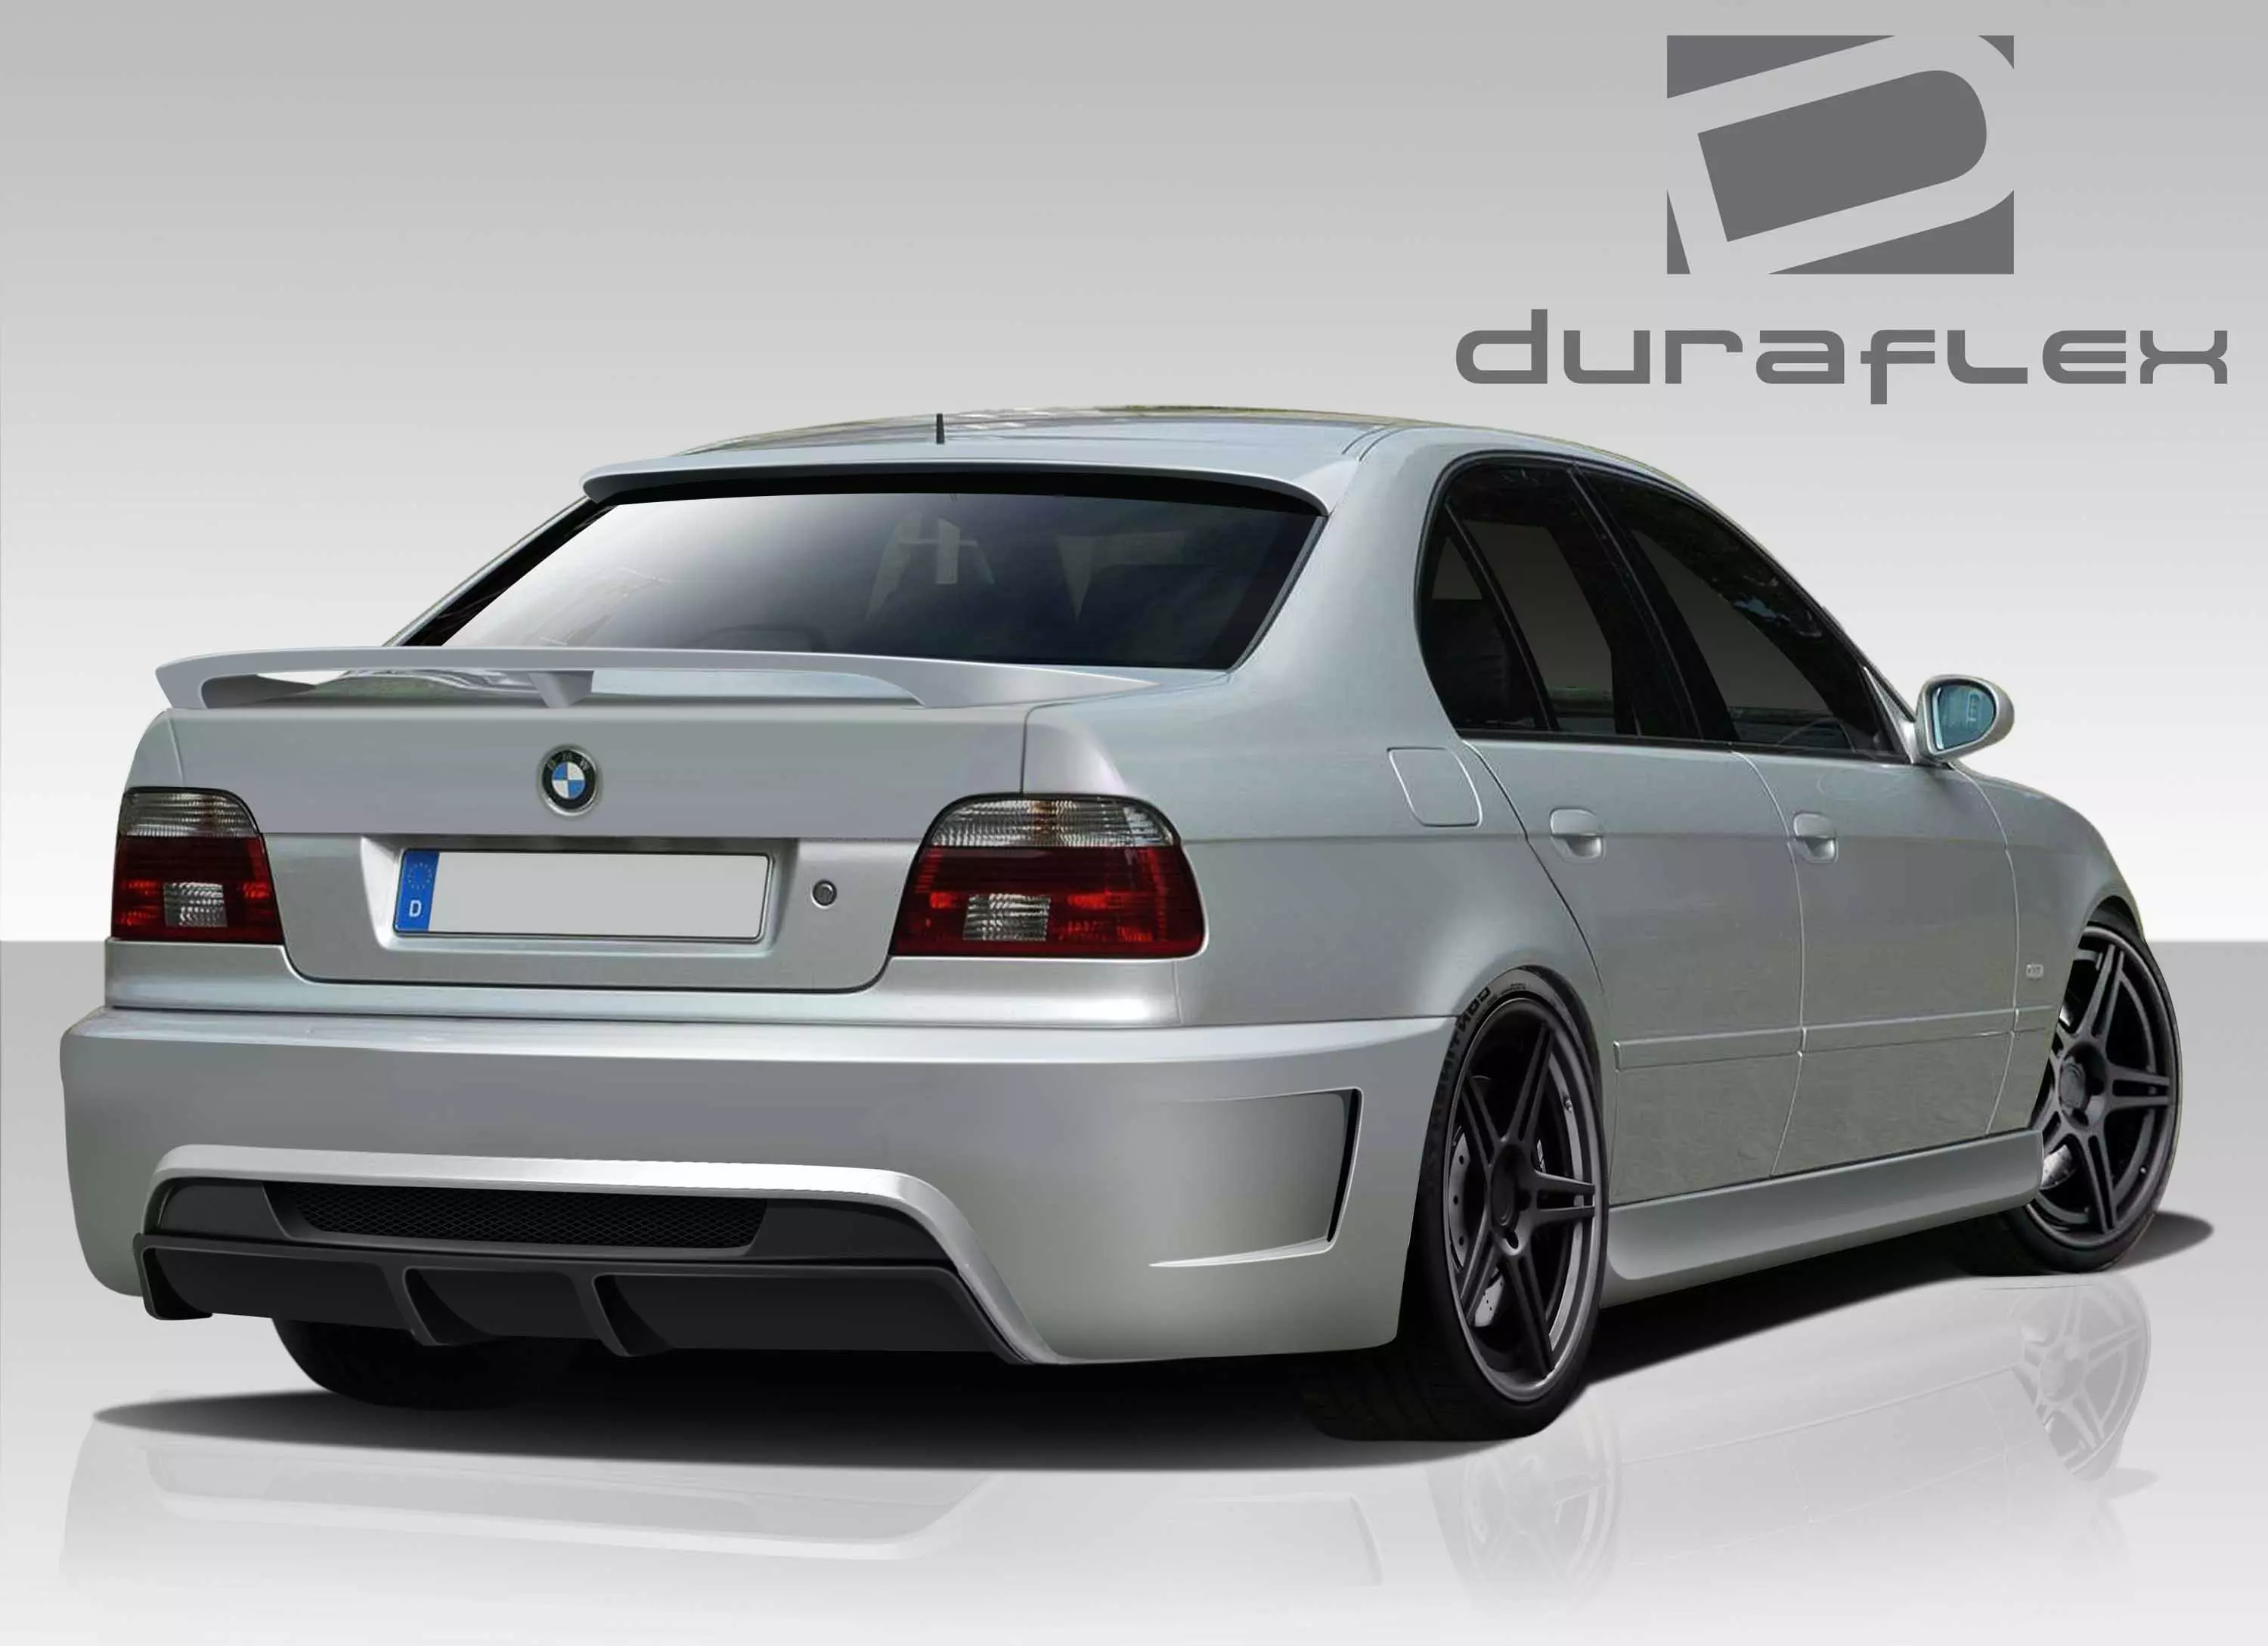 1997-2003 BMW 5 Series E39 4DR Duraflex GT-S Roof Wing Spoiler 1 Piece (S) - Image 2